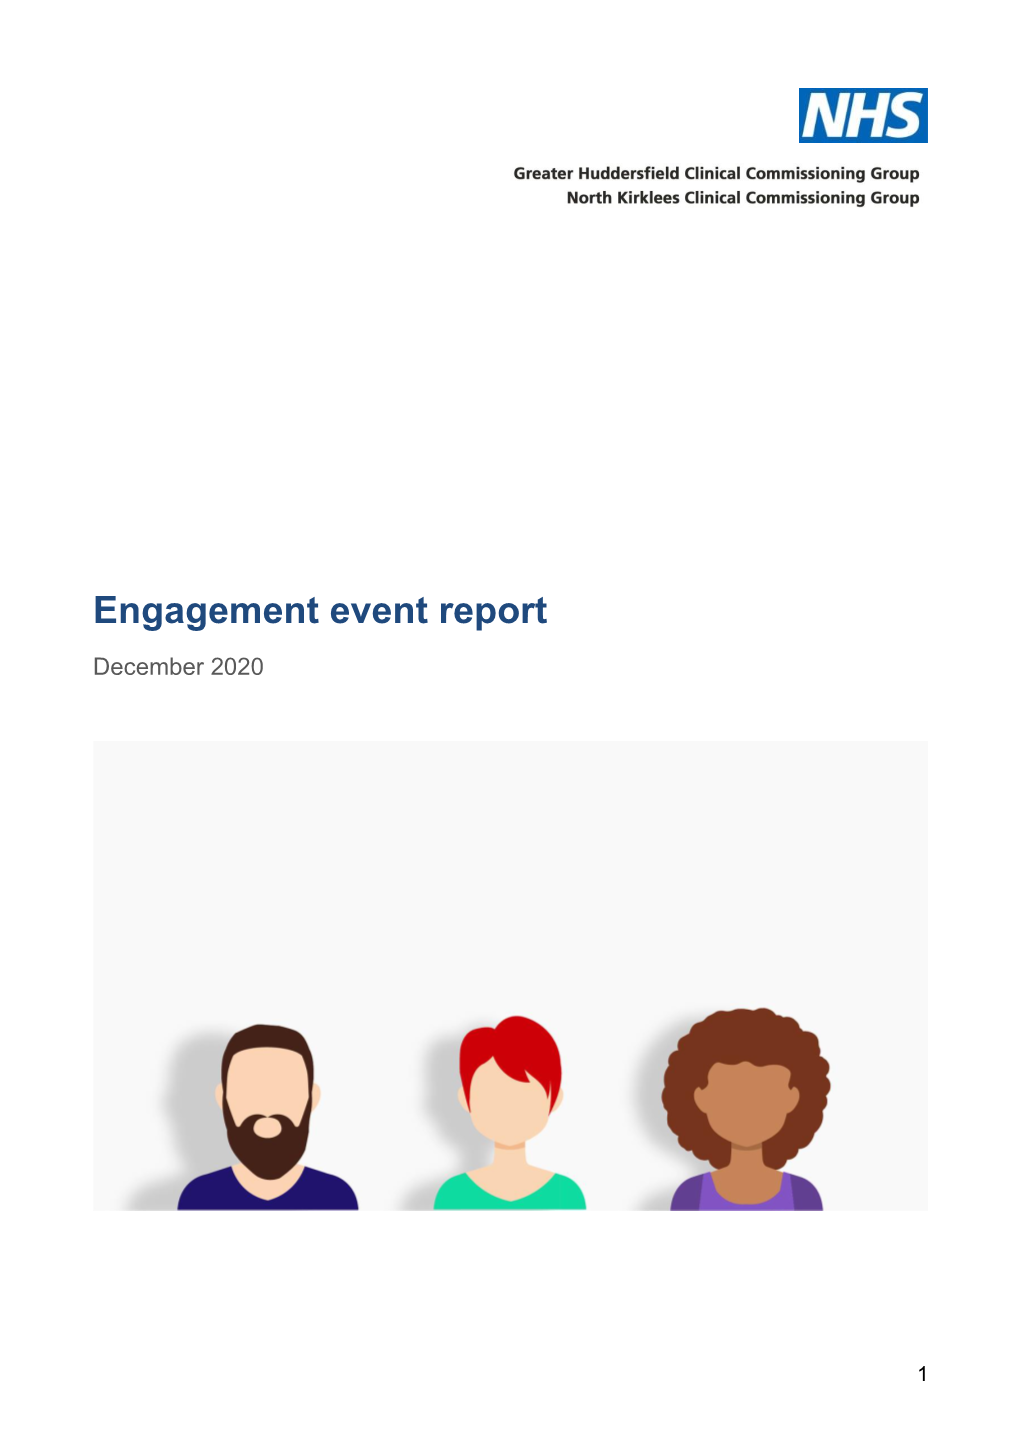 Engagement Event – December 2020